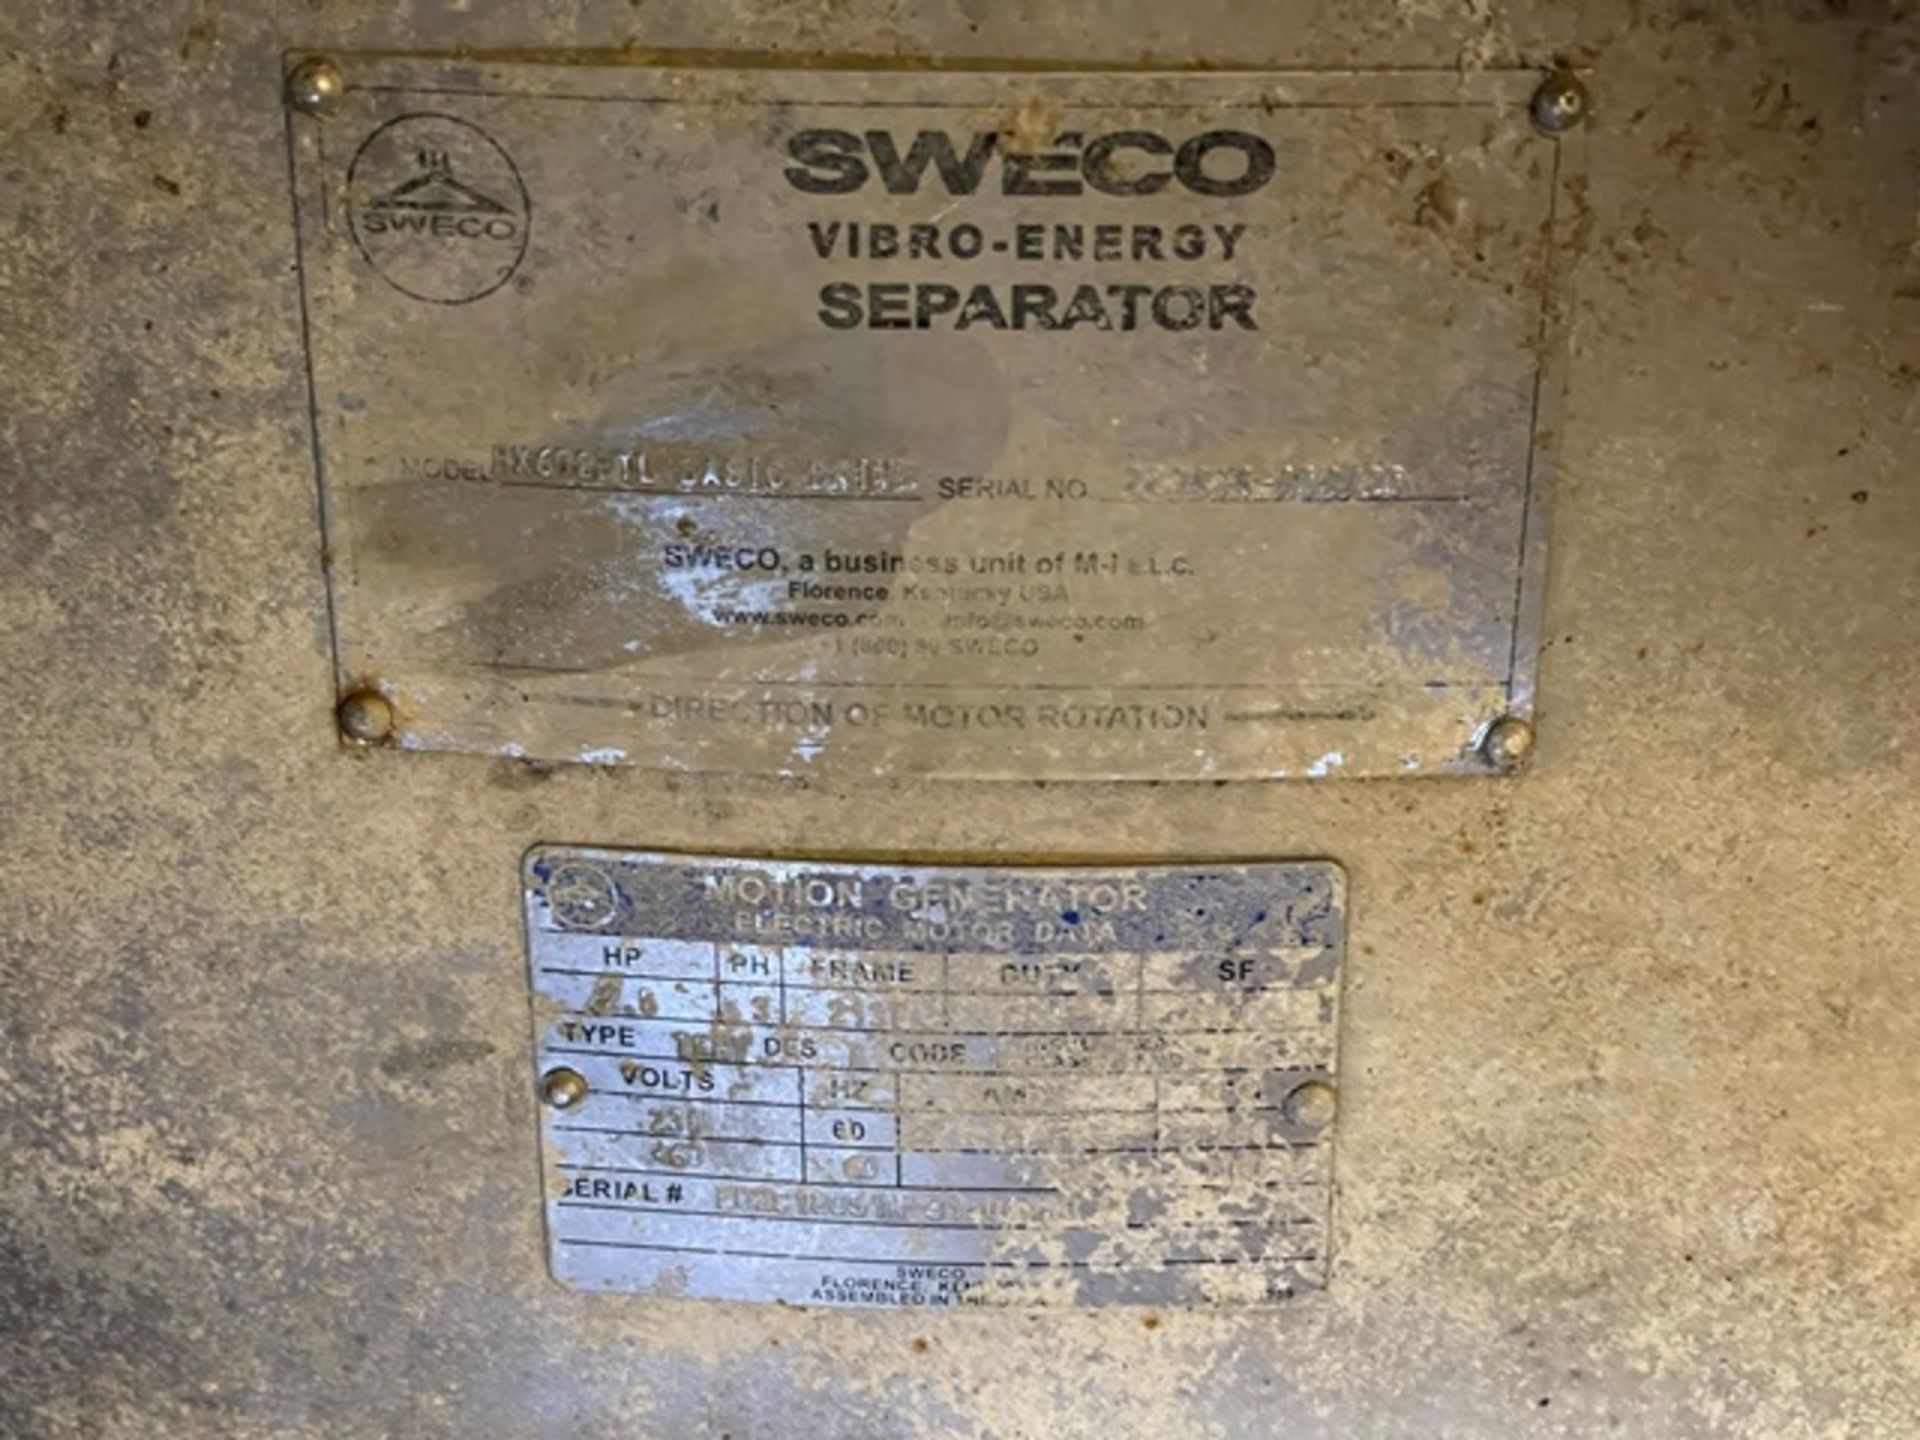 Sweeco Number 4 Vibro Energy Separator, Model HS60SBTL, Rigging & Loading Fee: $1400 - Image 2 of 2